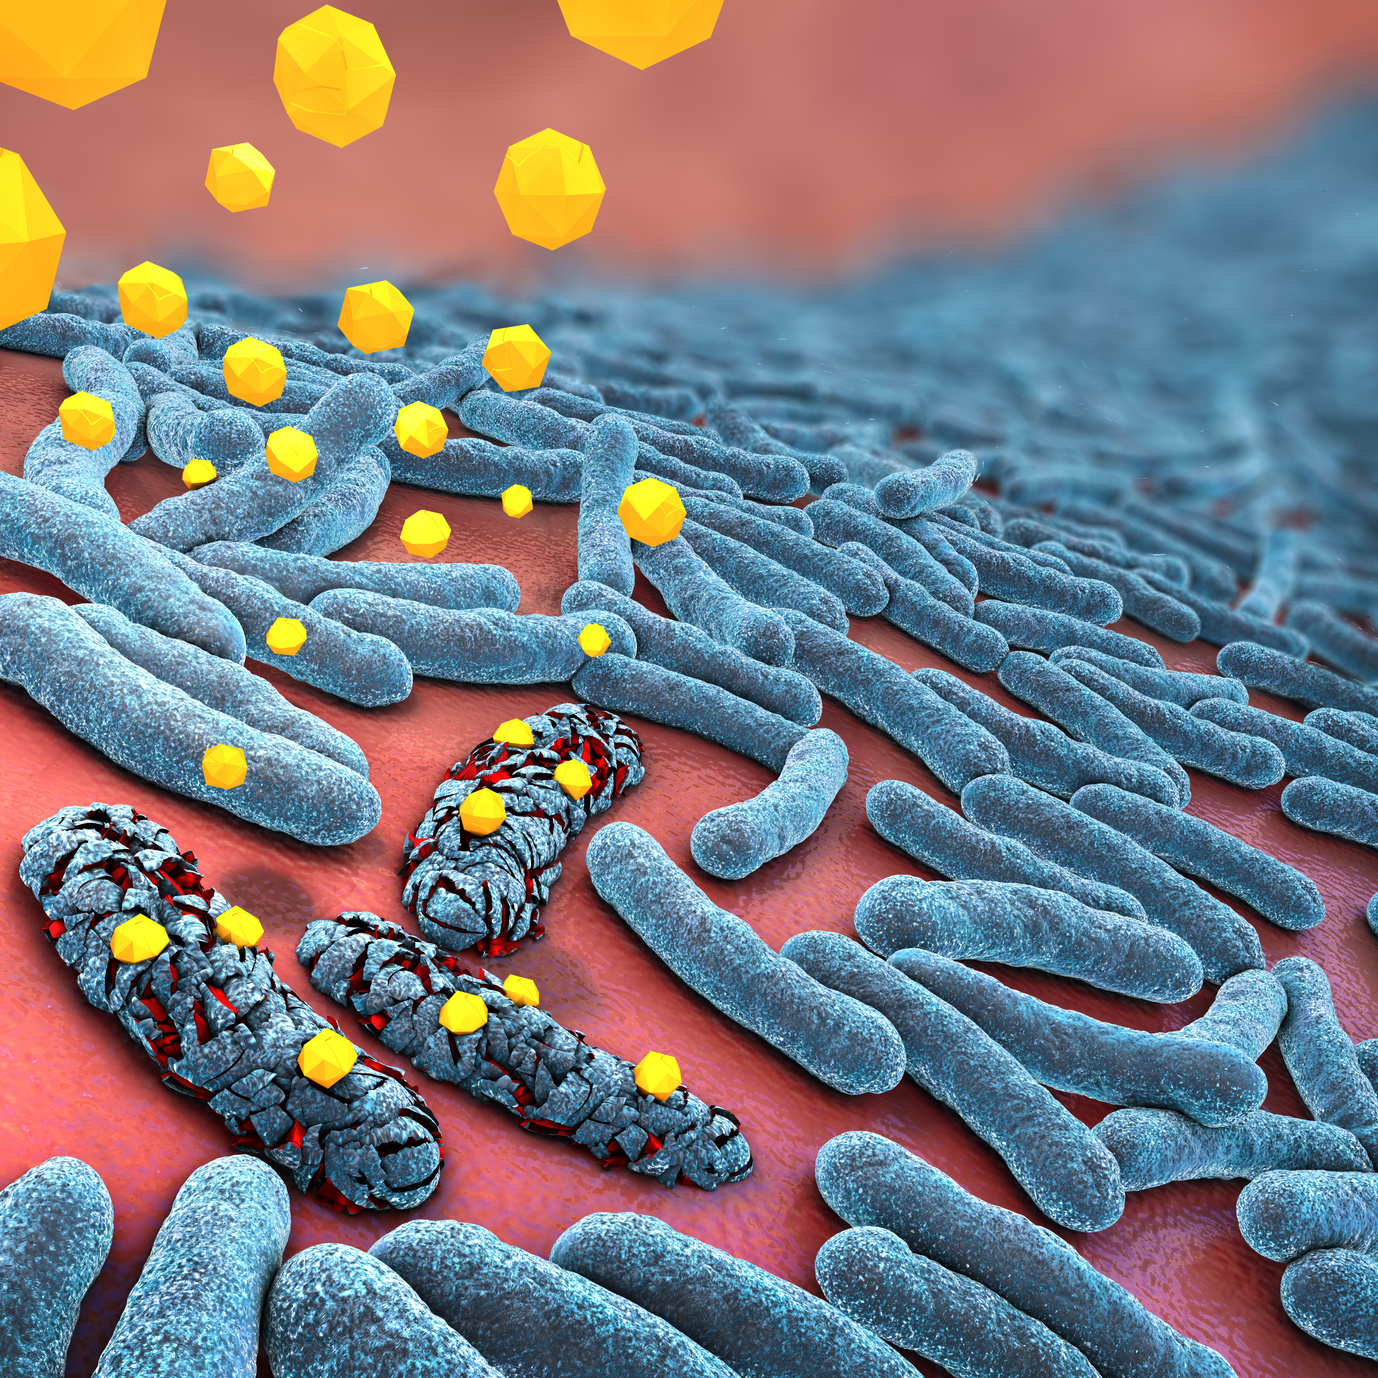 Антибиотик разрушает бактерии